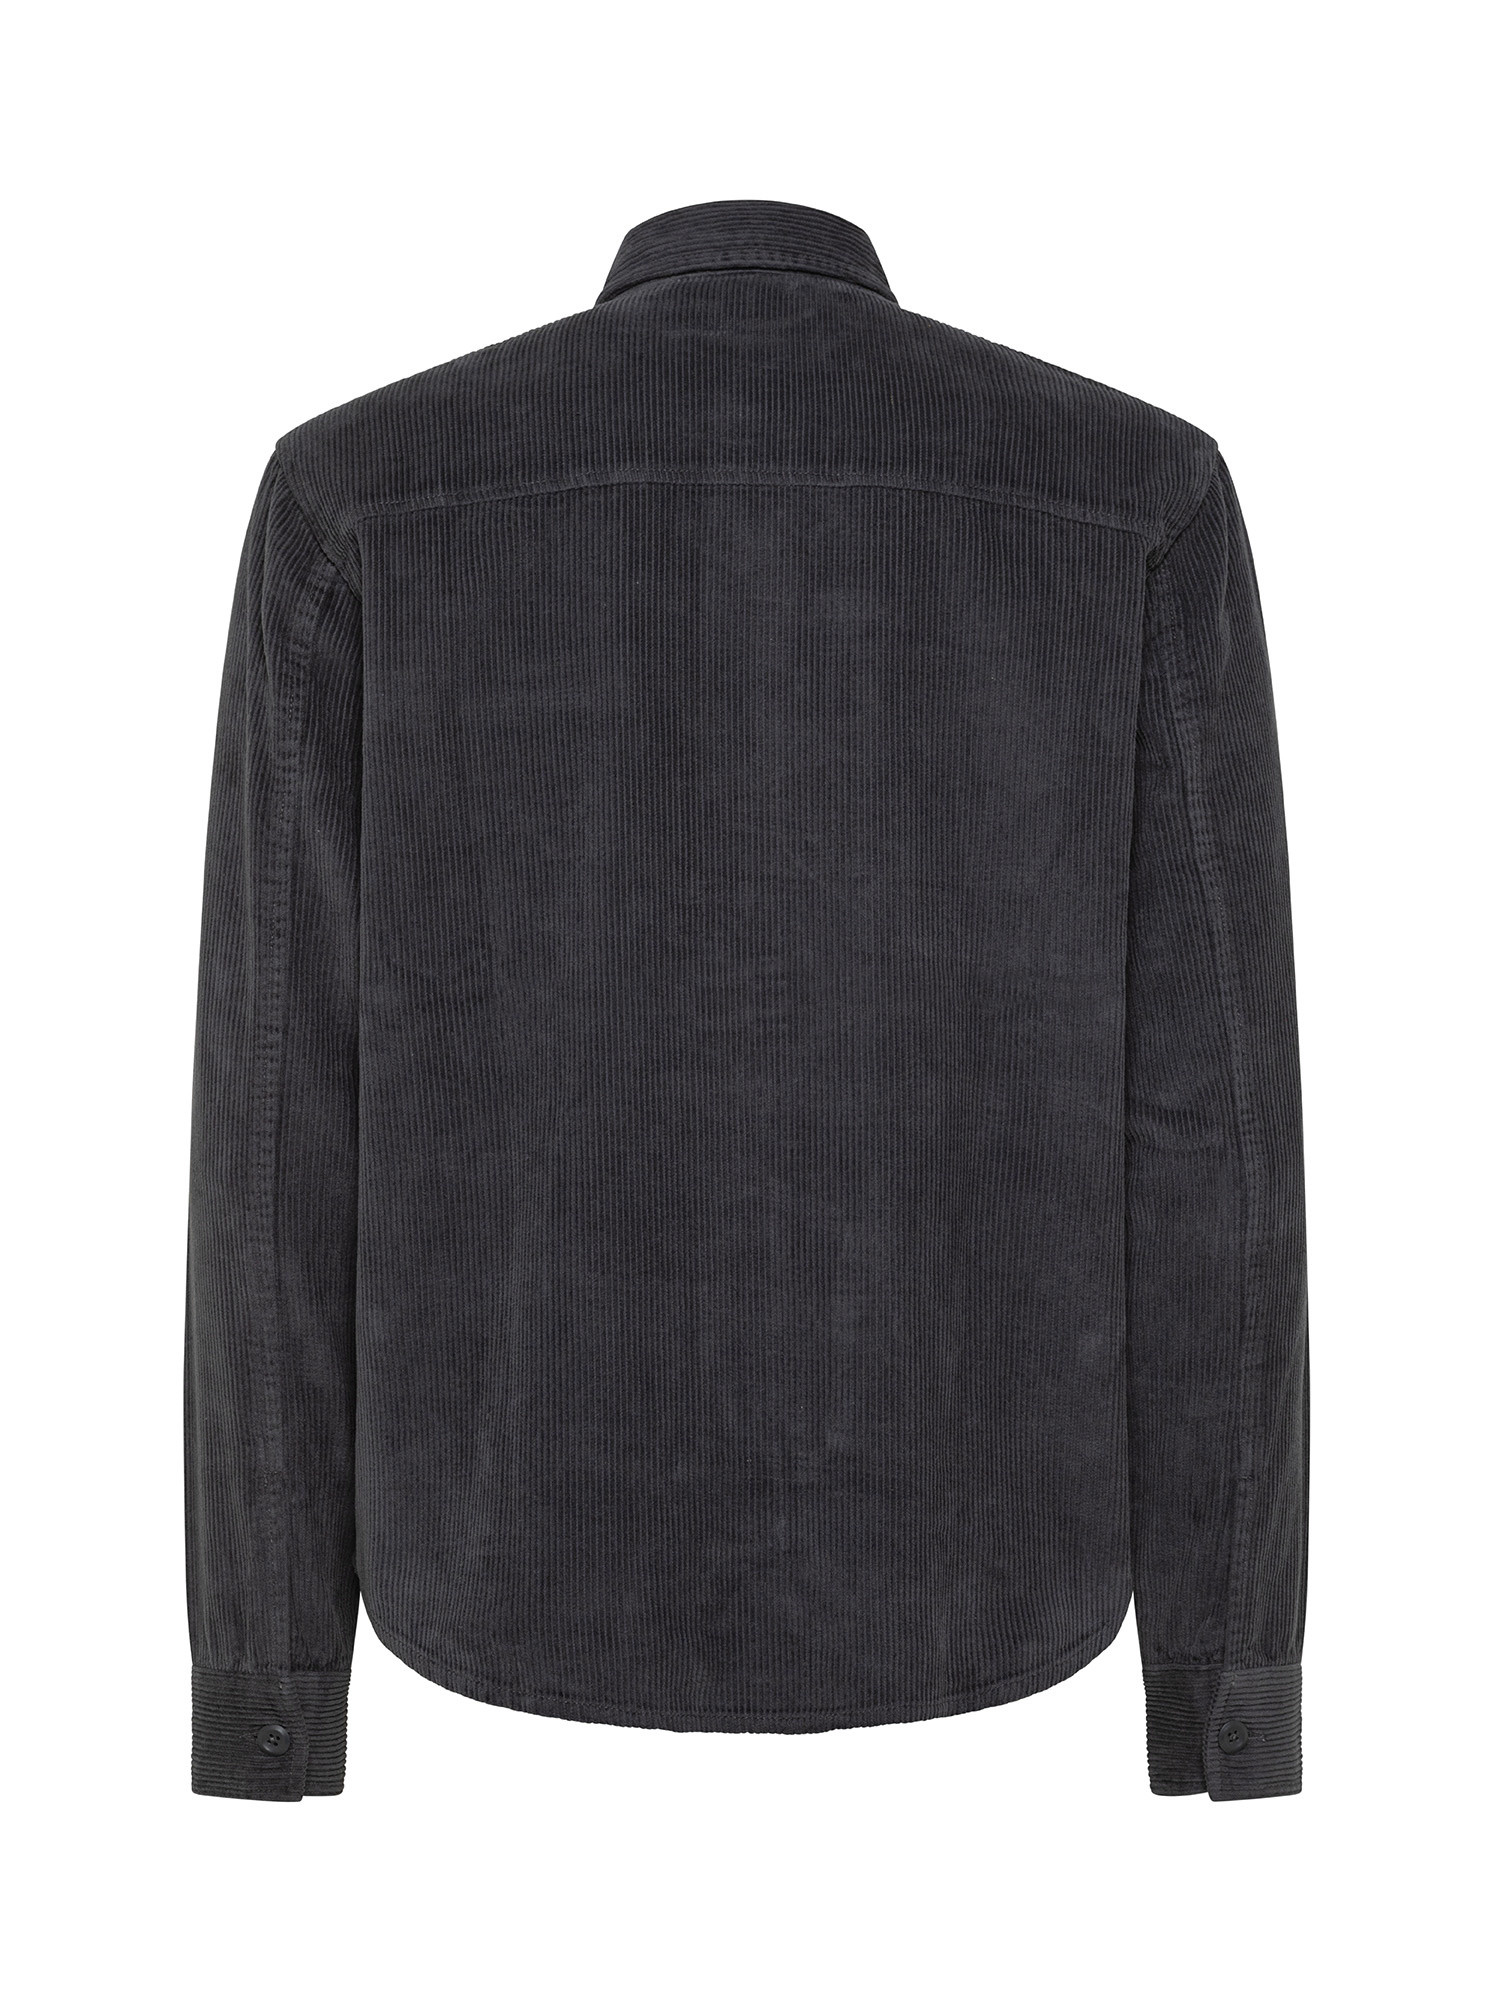 Oversized velvet shirt, Dark Grey, large image number 1